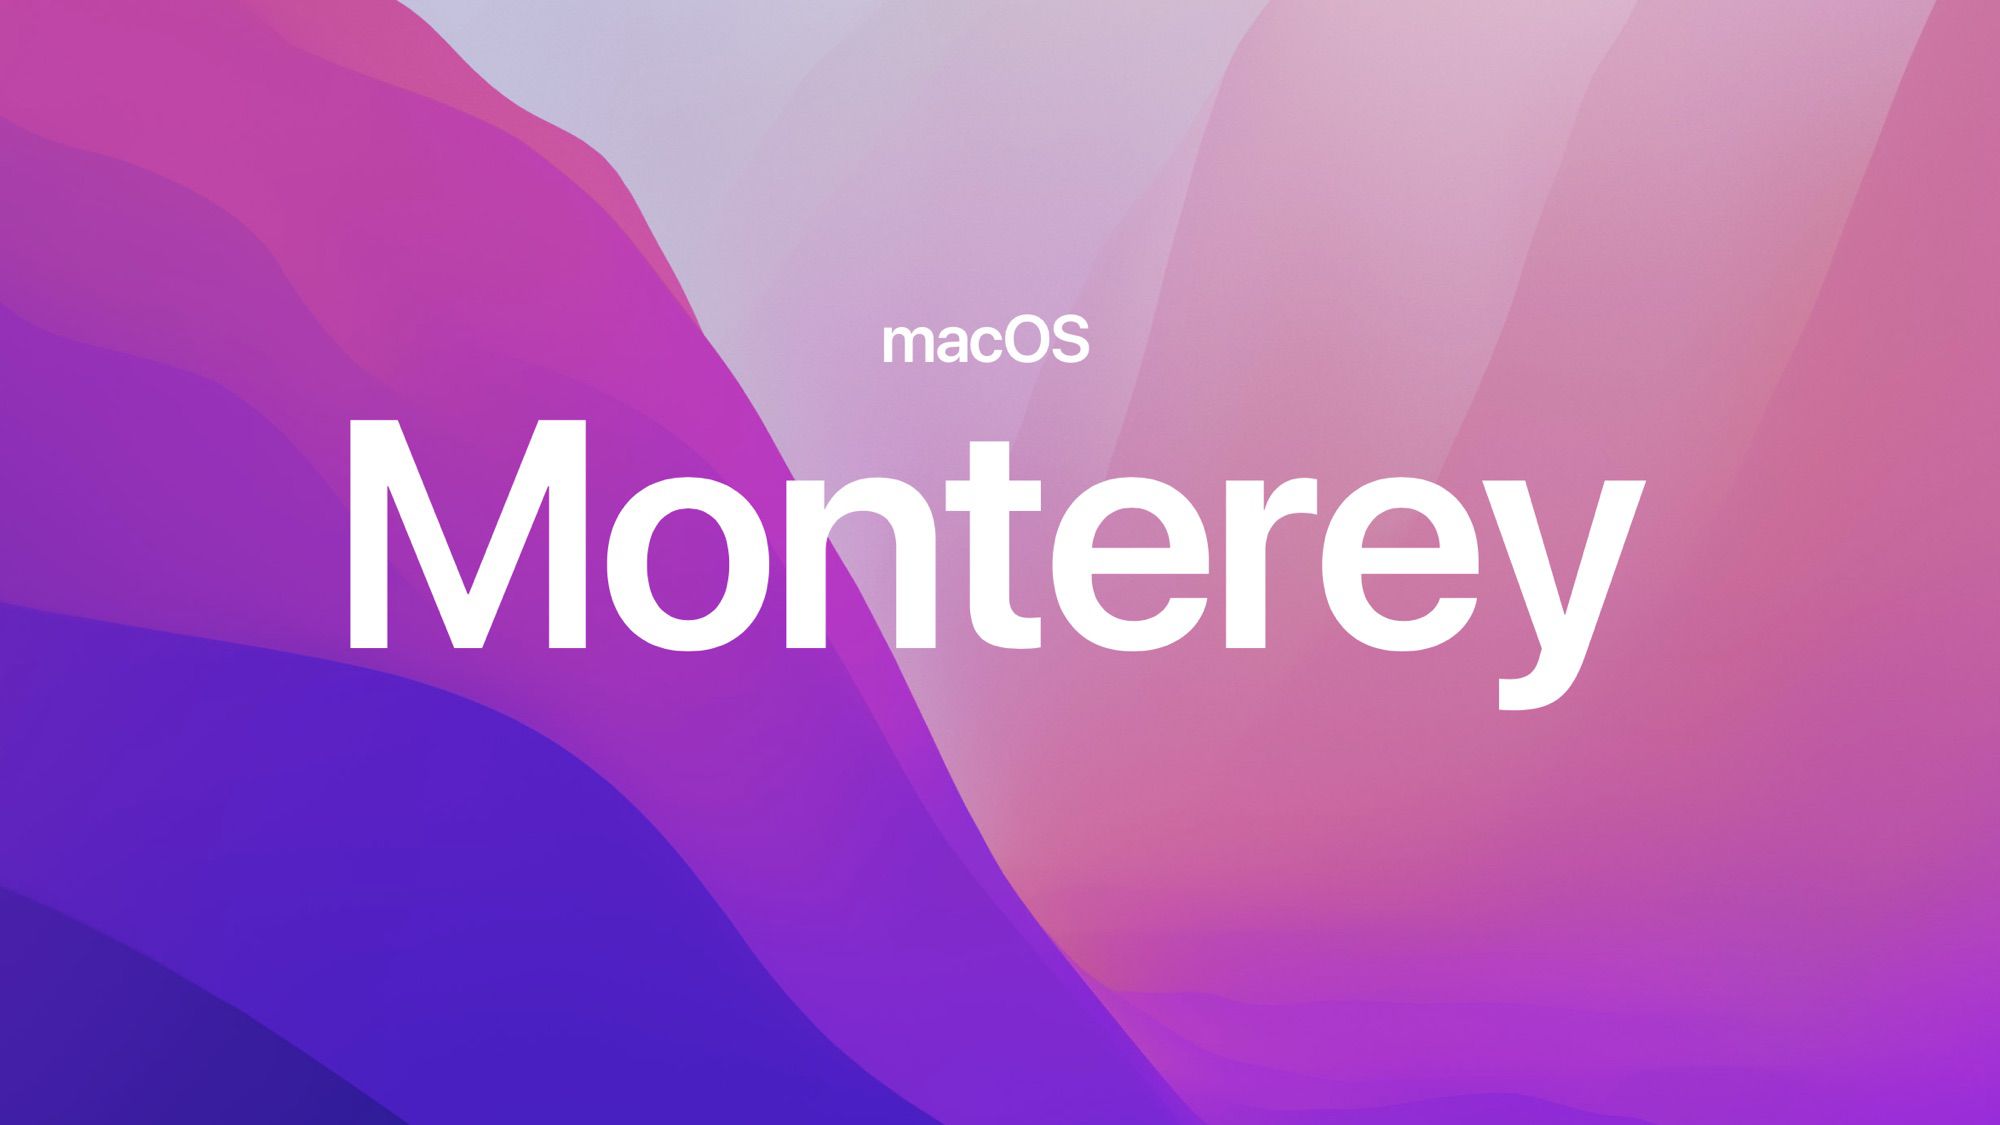 Trio of Friends Create Missing macOS Wallpaper of Monterey Landscape -  MacRumors